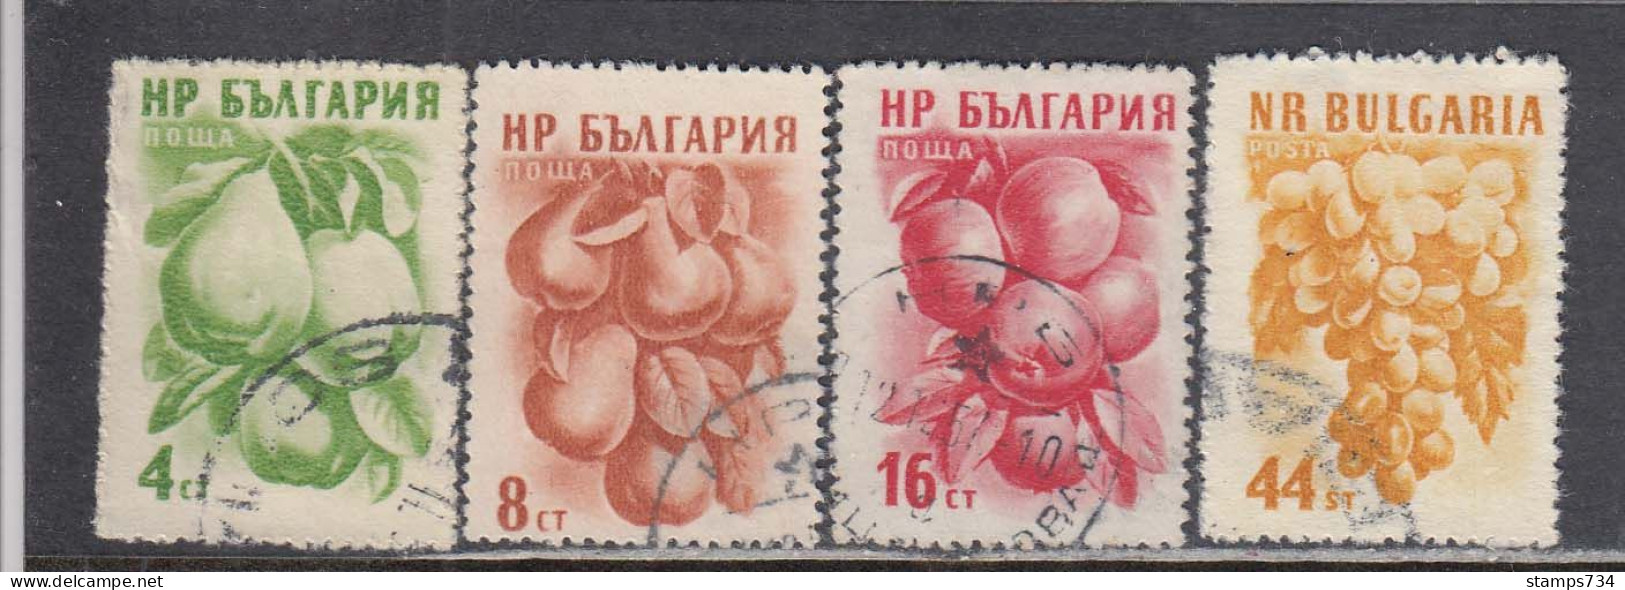 Bulgaria 1957 - Fruits(3), Mi-Nr. 1022/25, Used - Oblitérés